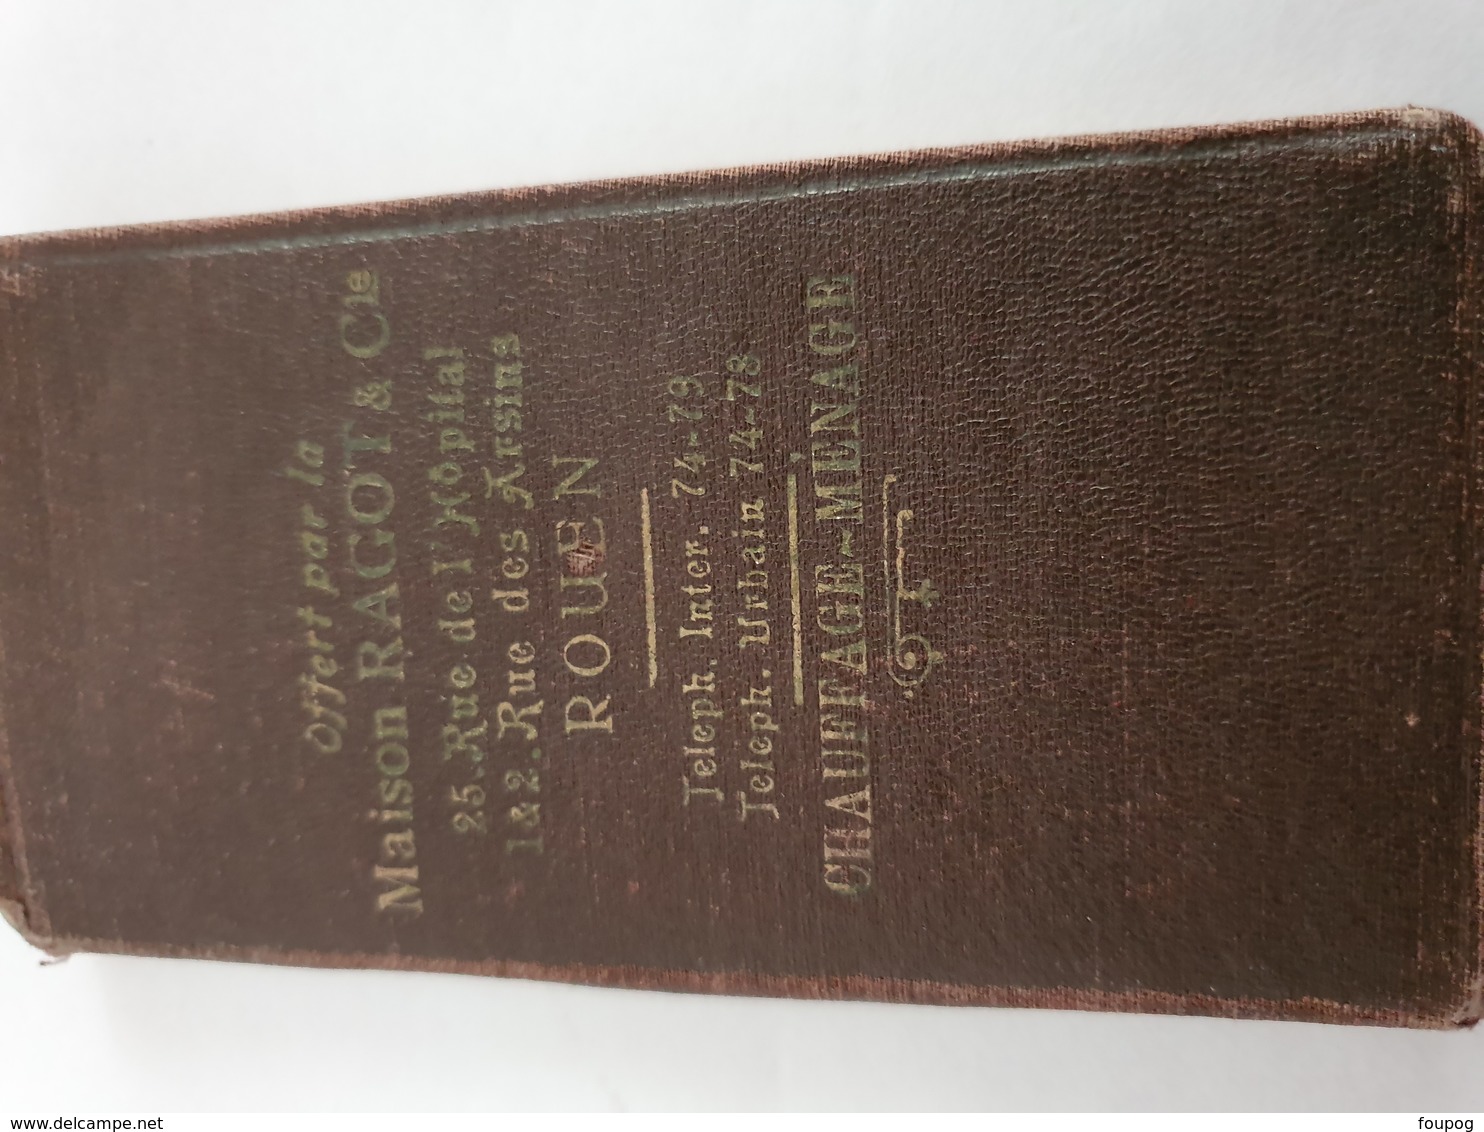 CARNET AGENDA PUBLICITE MAISON RAGOT CHAUFFAGE ROUEN ANNEE 1931 - Grand Format : 1921-40